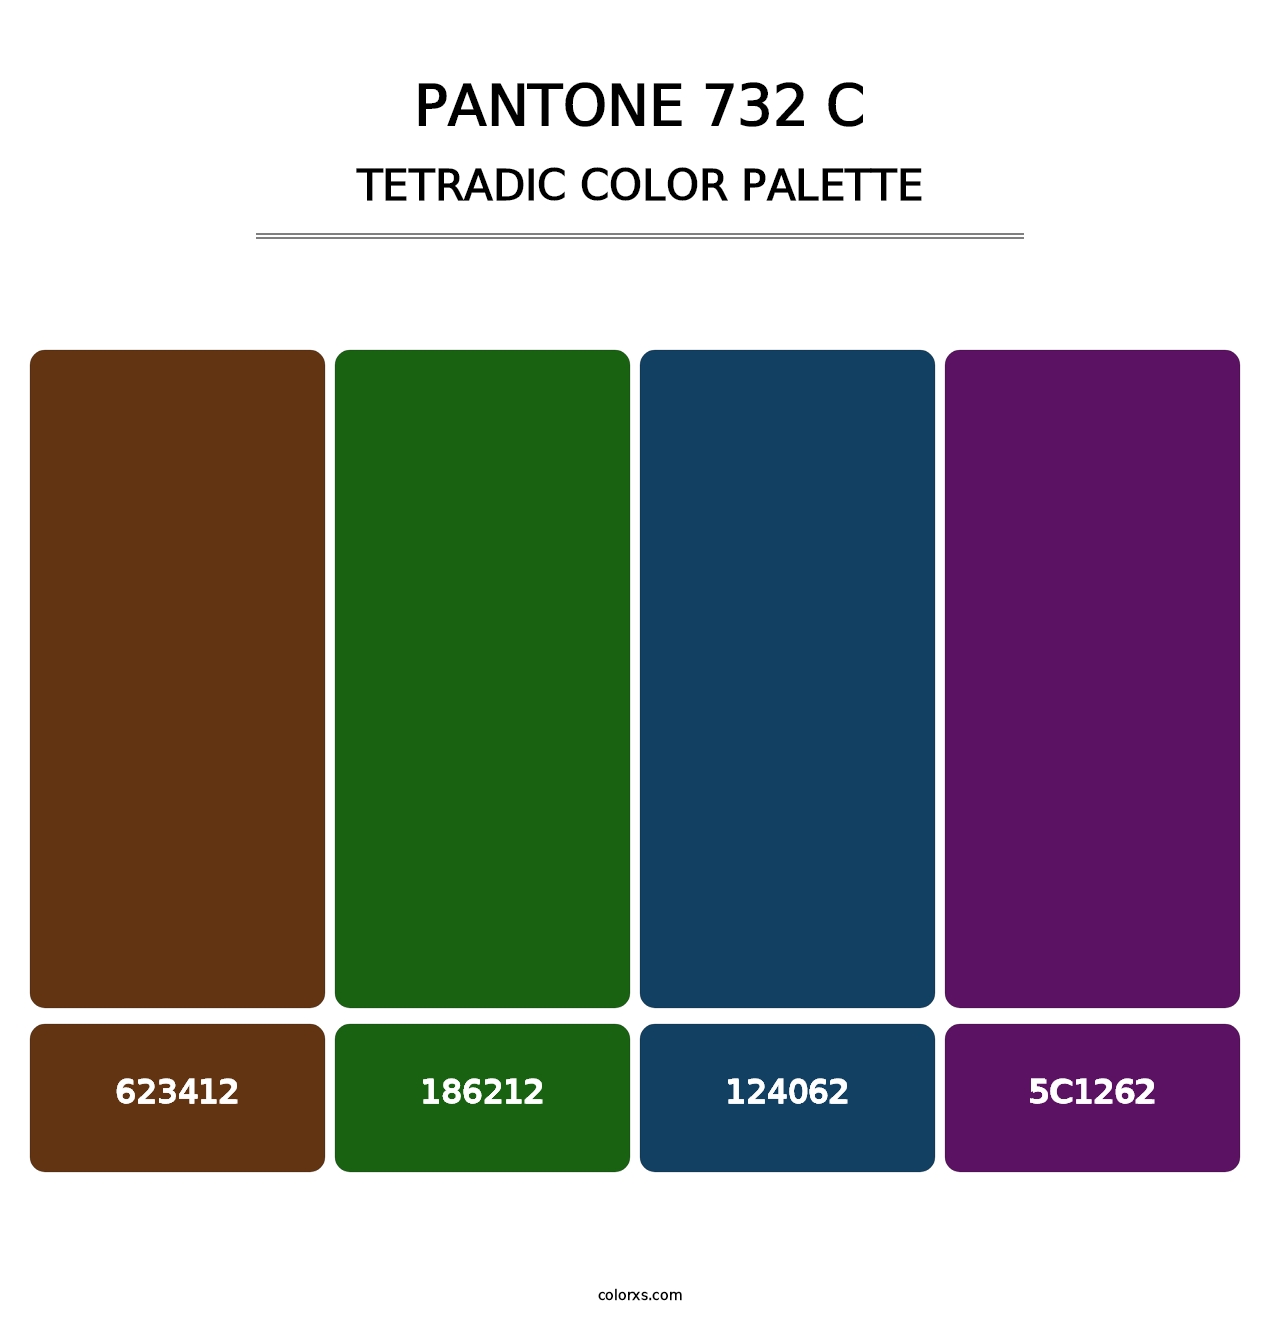 PANTONE 732 C - Tetradic Color Palette